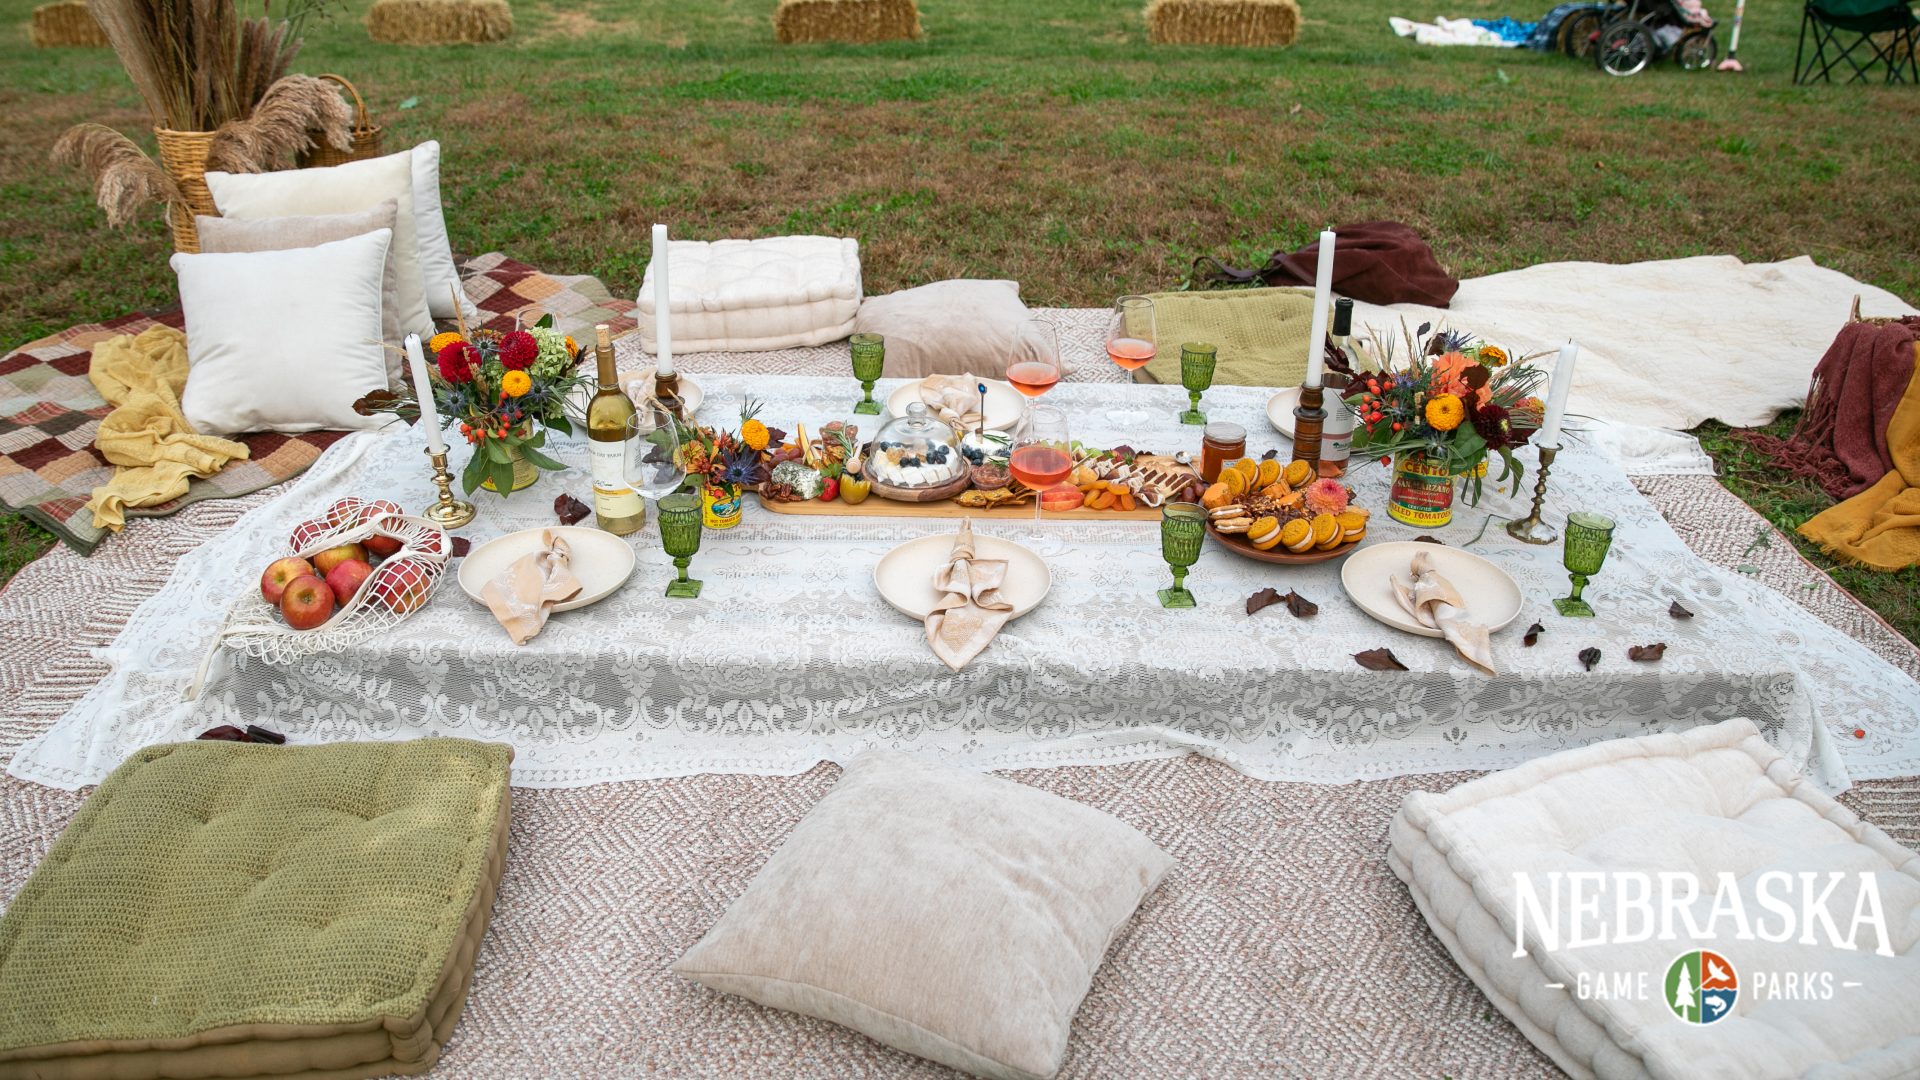 picnic set up on blanket on ground